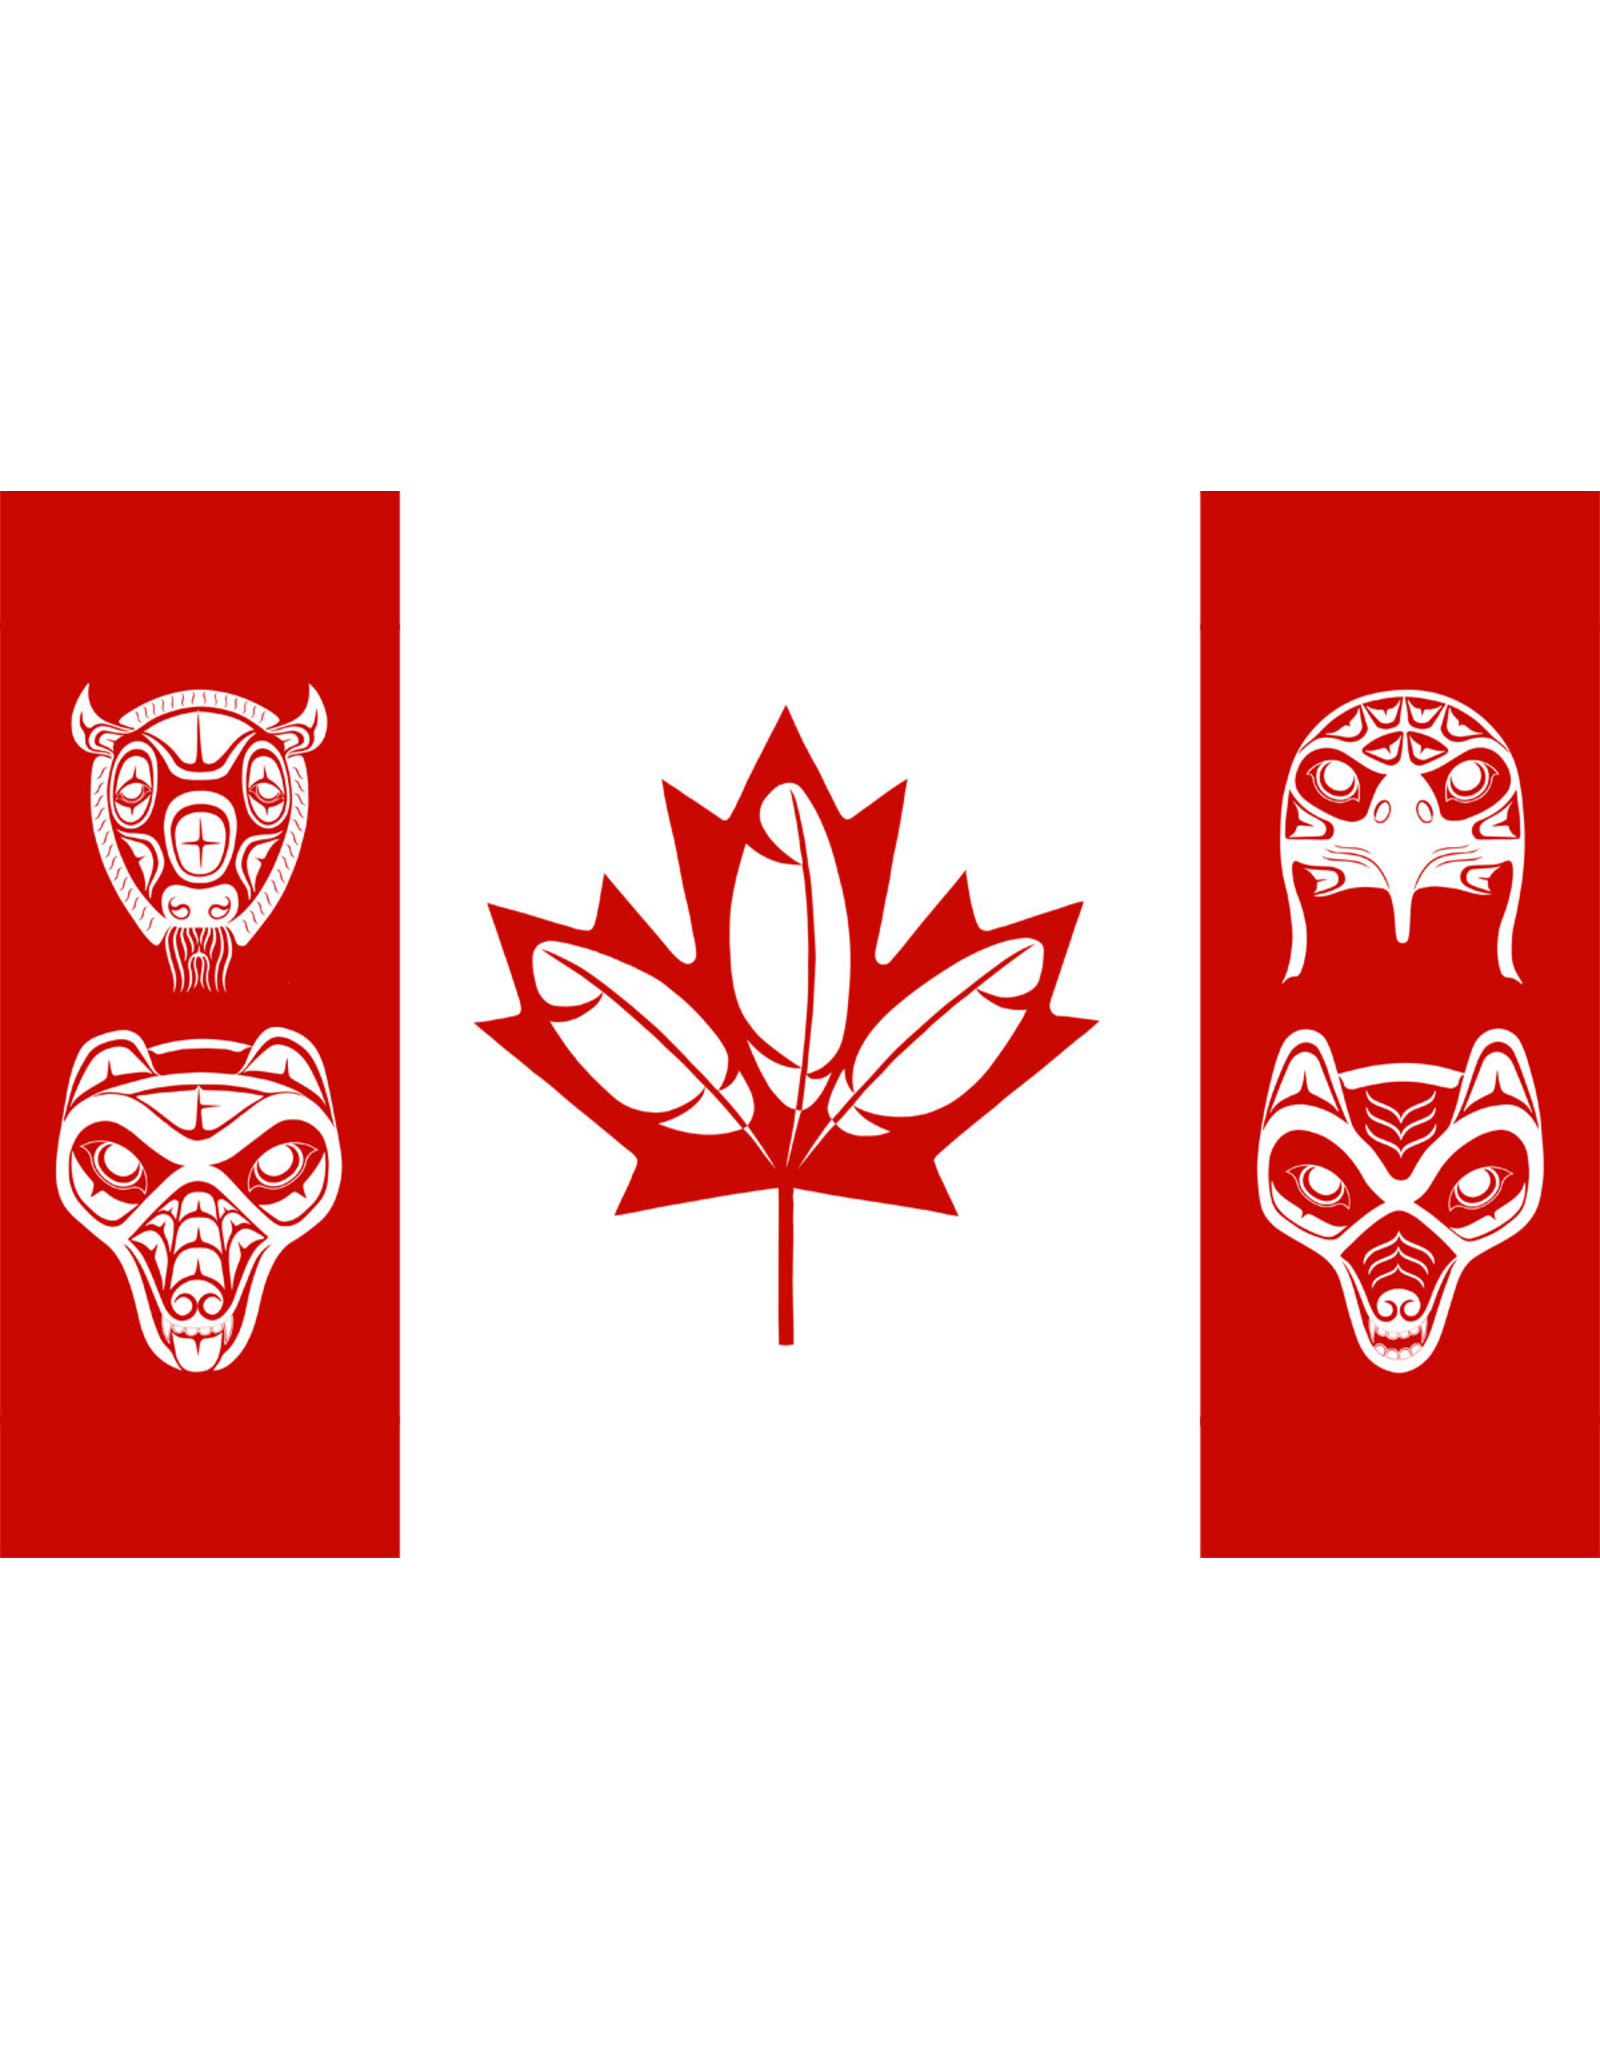 Toile Spirit of Canada par Lon French